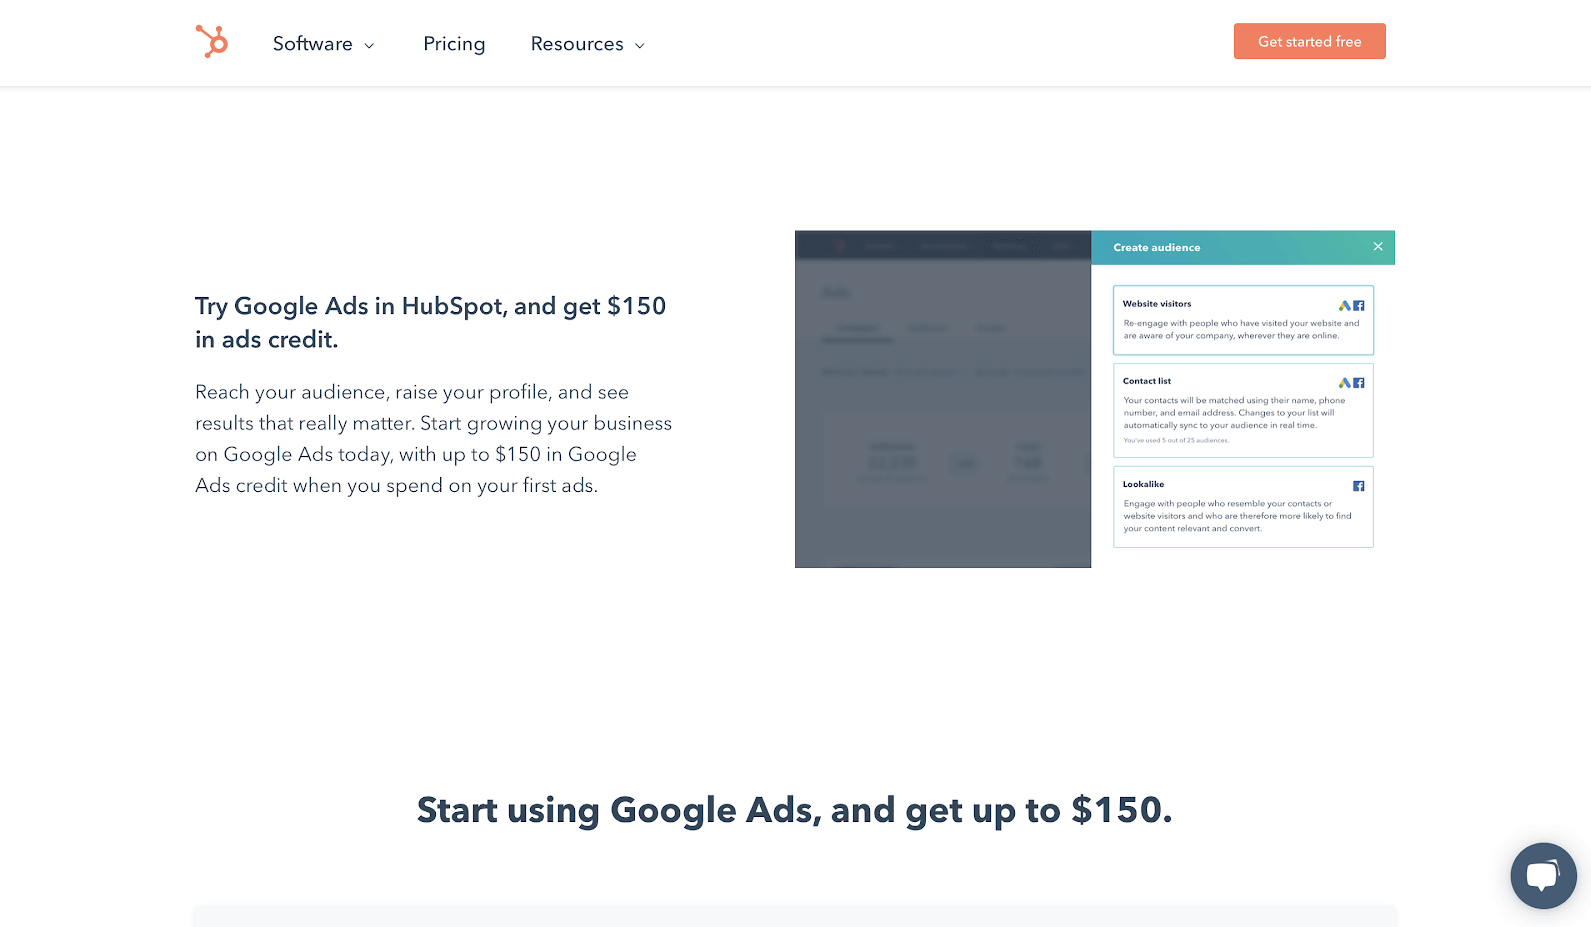 ads-optimization-events-landing-page-google-offer-150